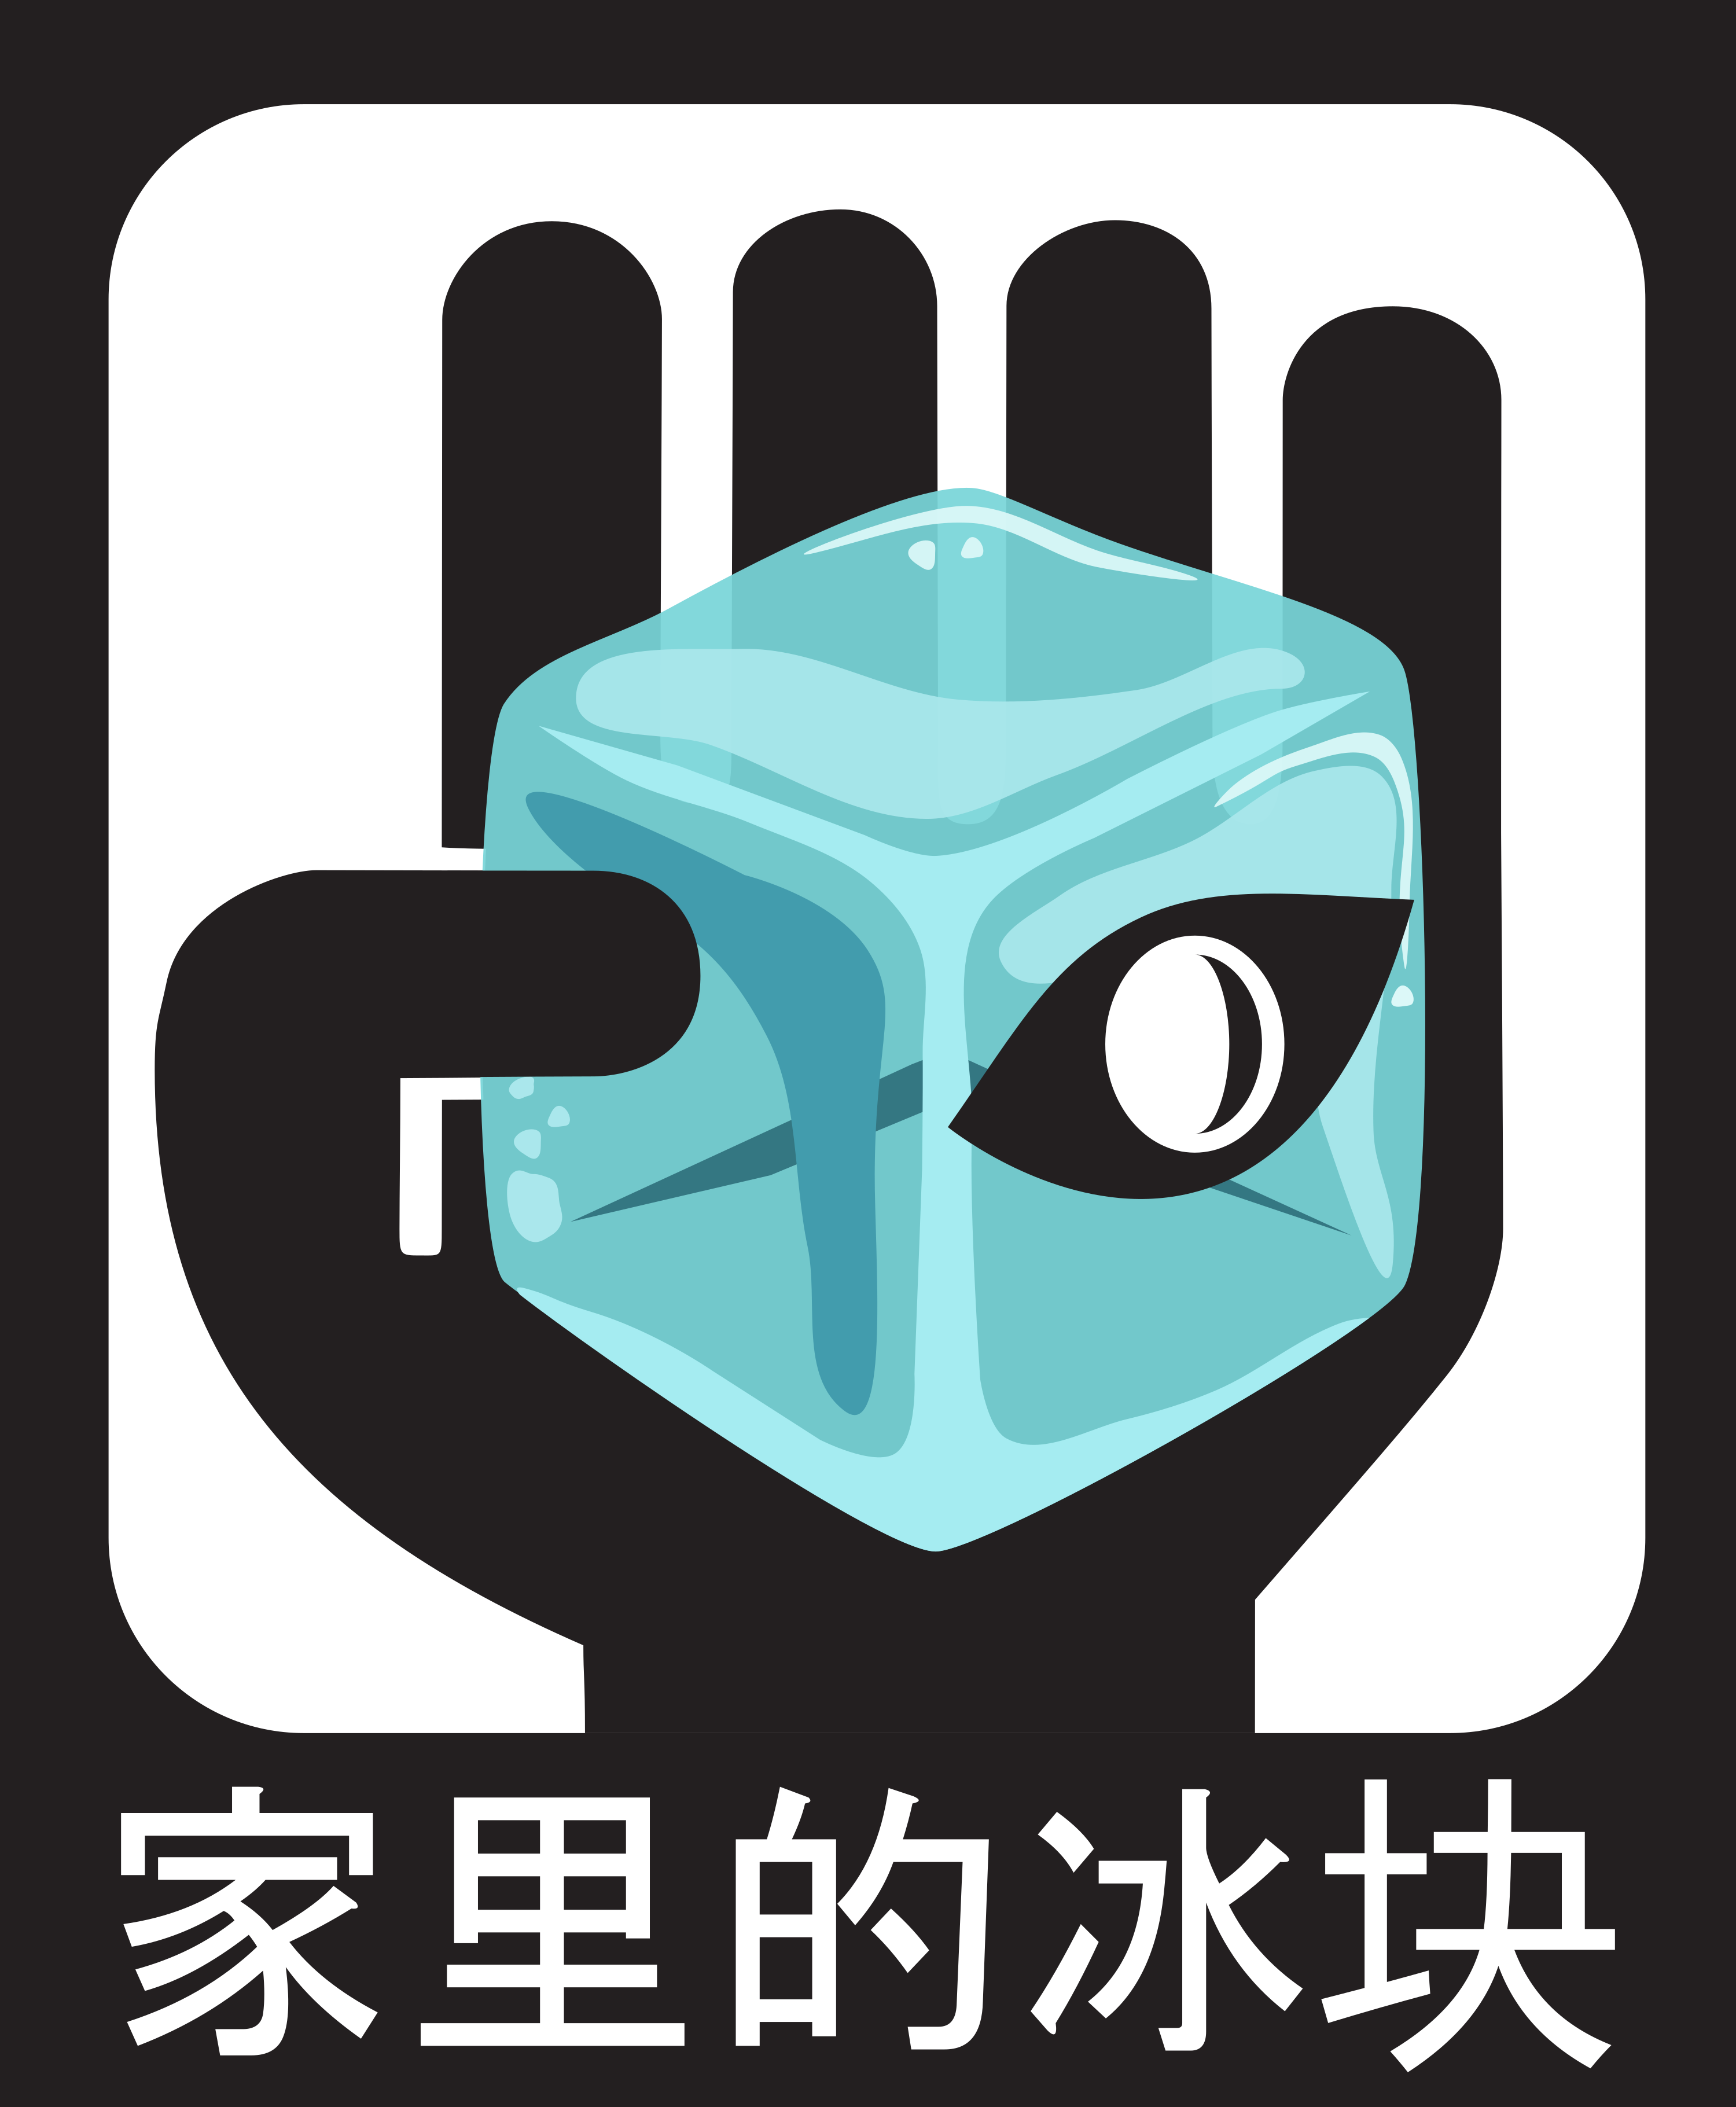 Cube on ICE logo